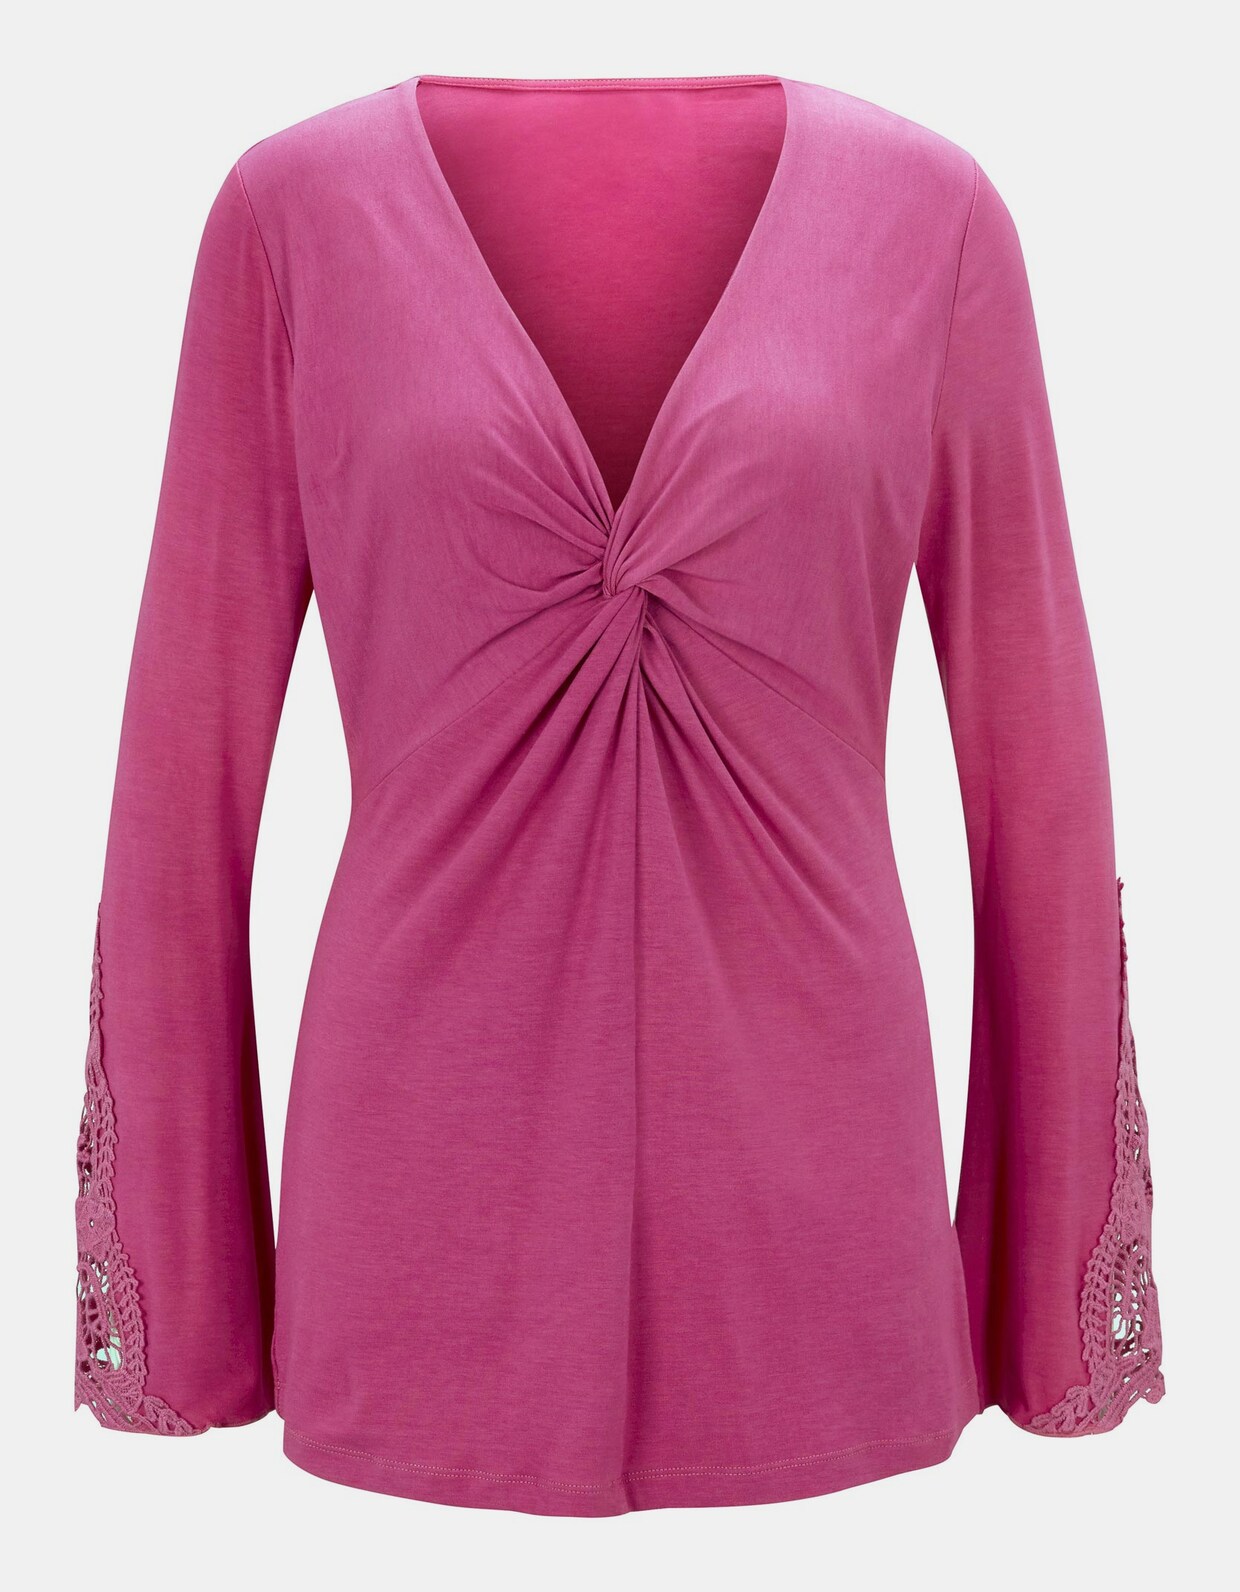 Patrizia Dini Shirt - pink